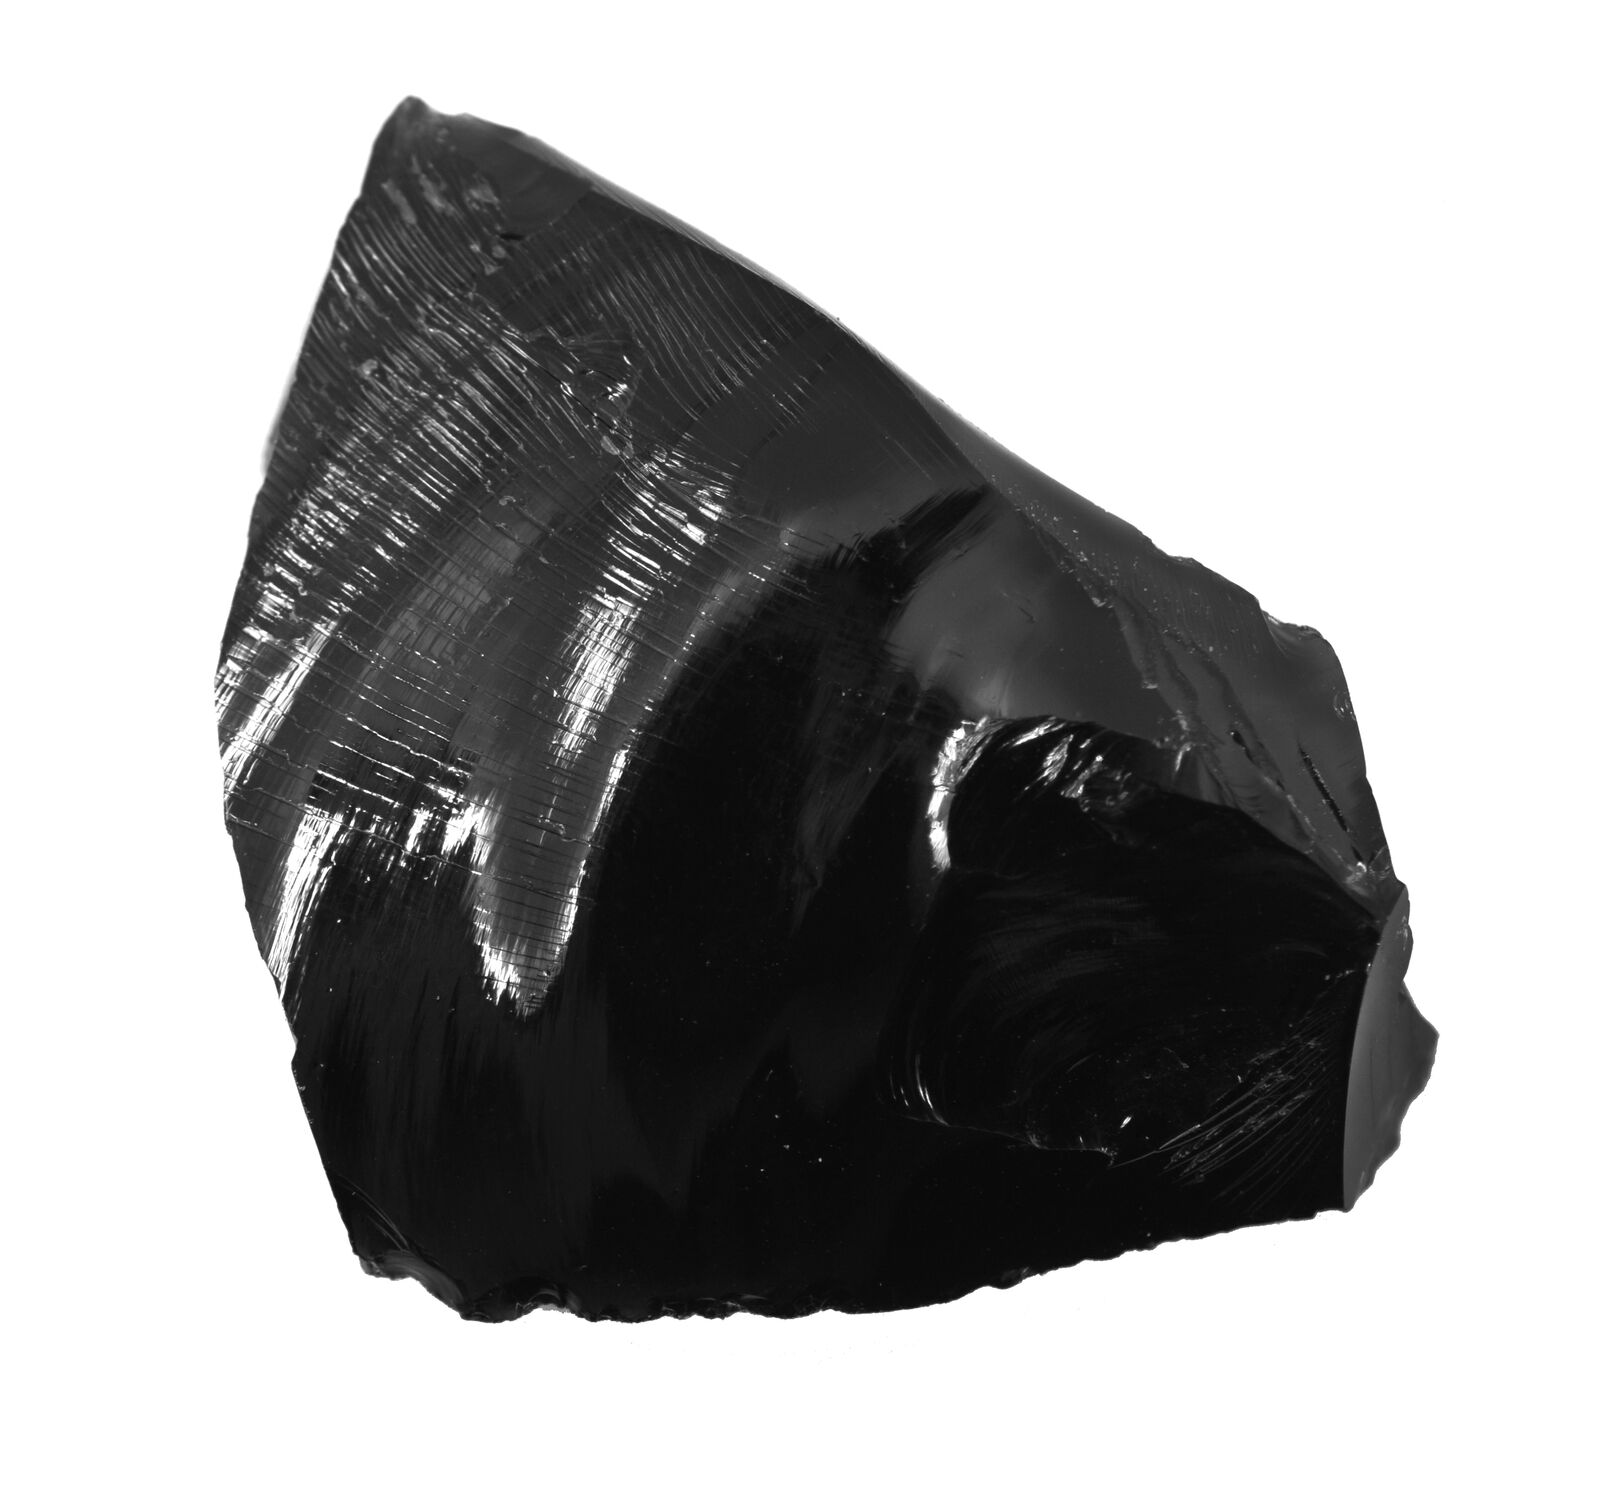 Raw Obsidian Igneous Rock Specimen, 1